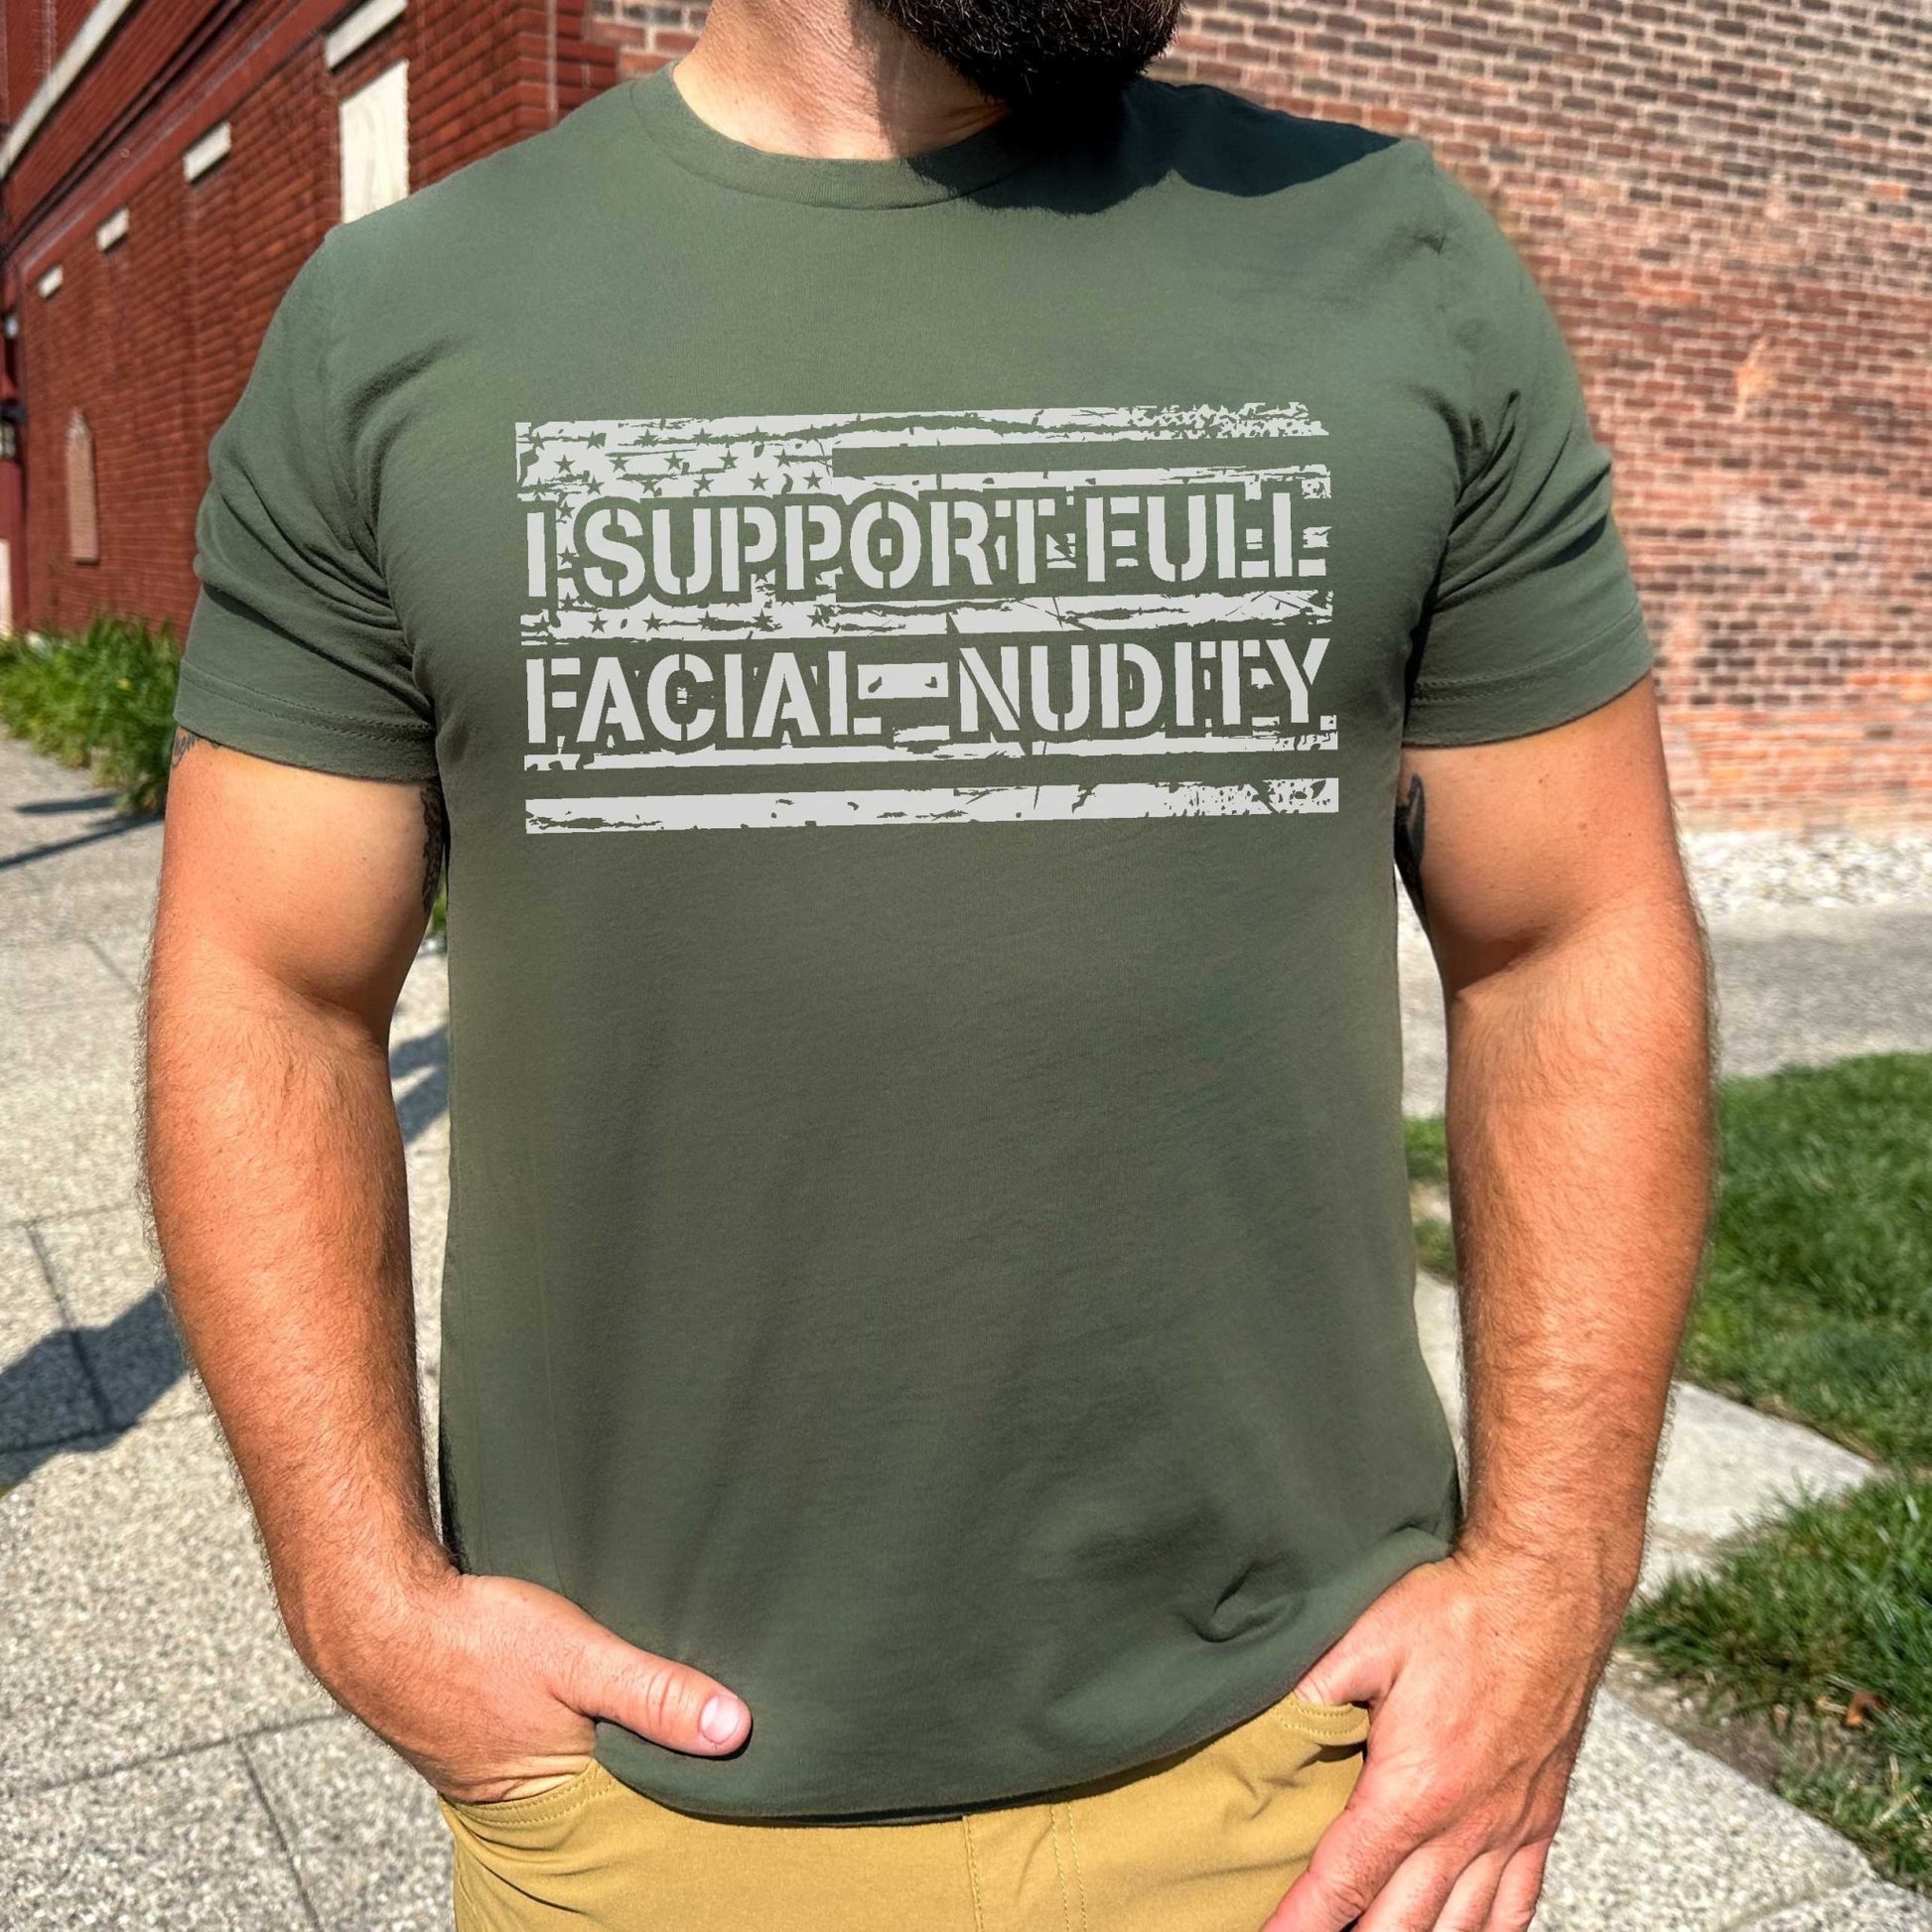 Mask Shirt, Conspirary shirt, I support Full Facial Nudity t shirt funny tshirt trucker tee dad shirt t-shirt boyfriend husband gift - SBS T Shop